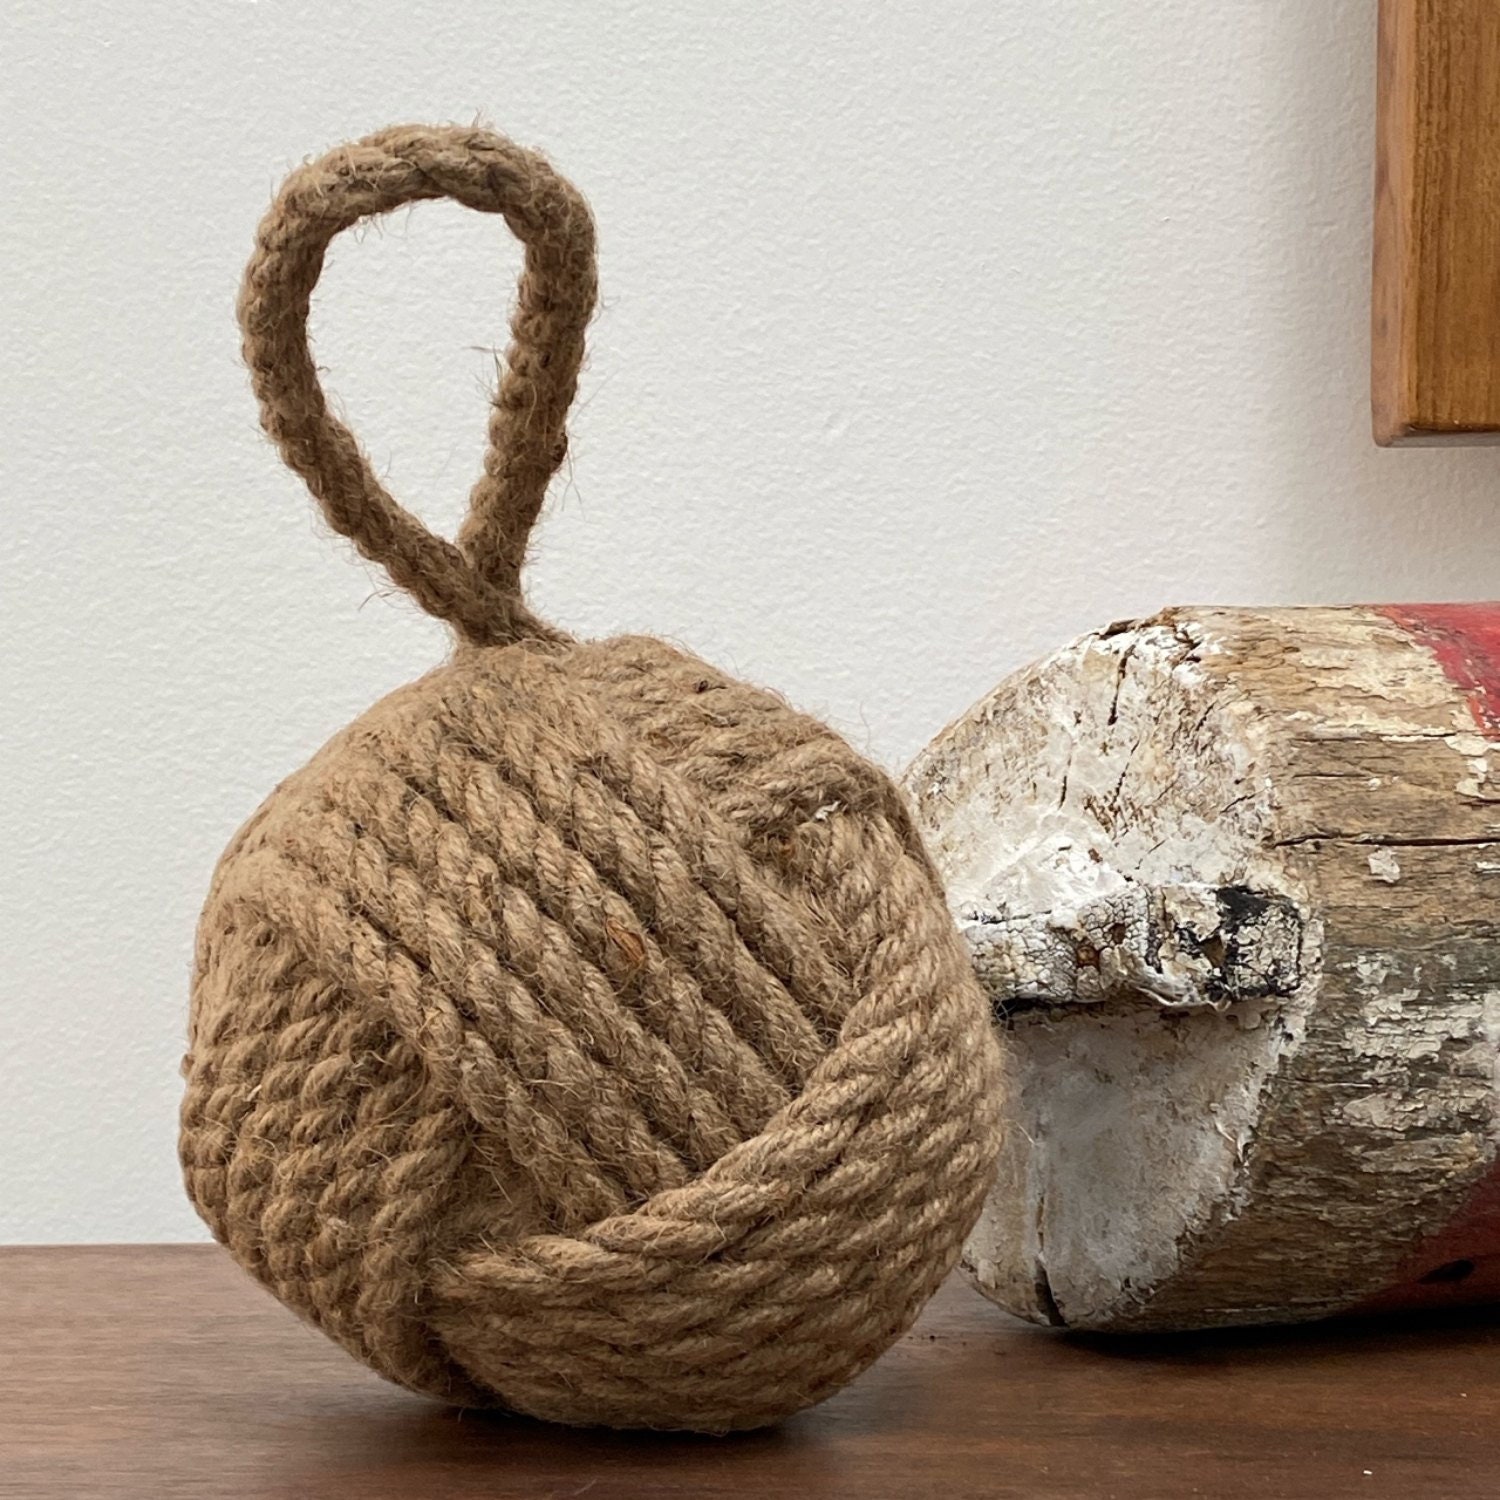 Ravenox Decorative Nautical Rope Balls | Home Decor Centerpieces Tan